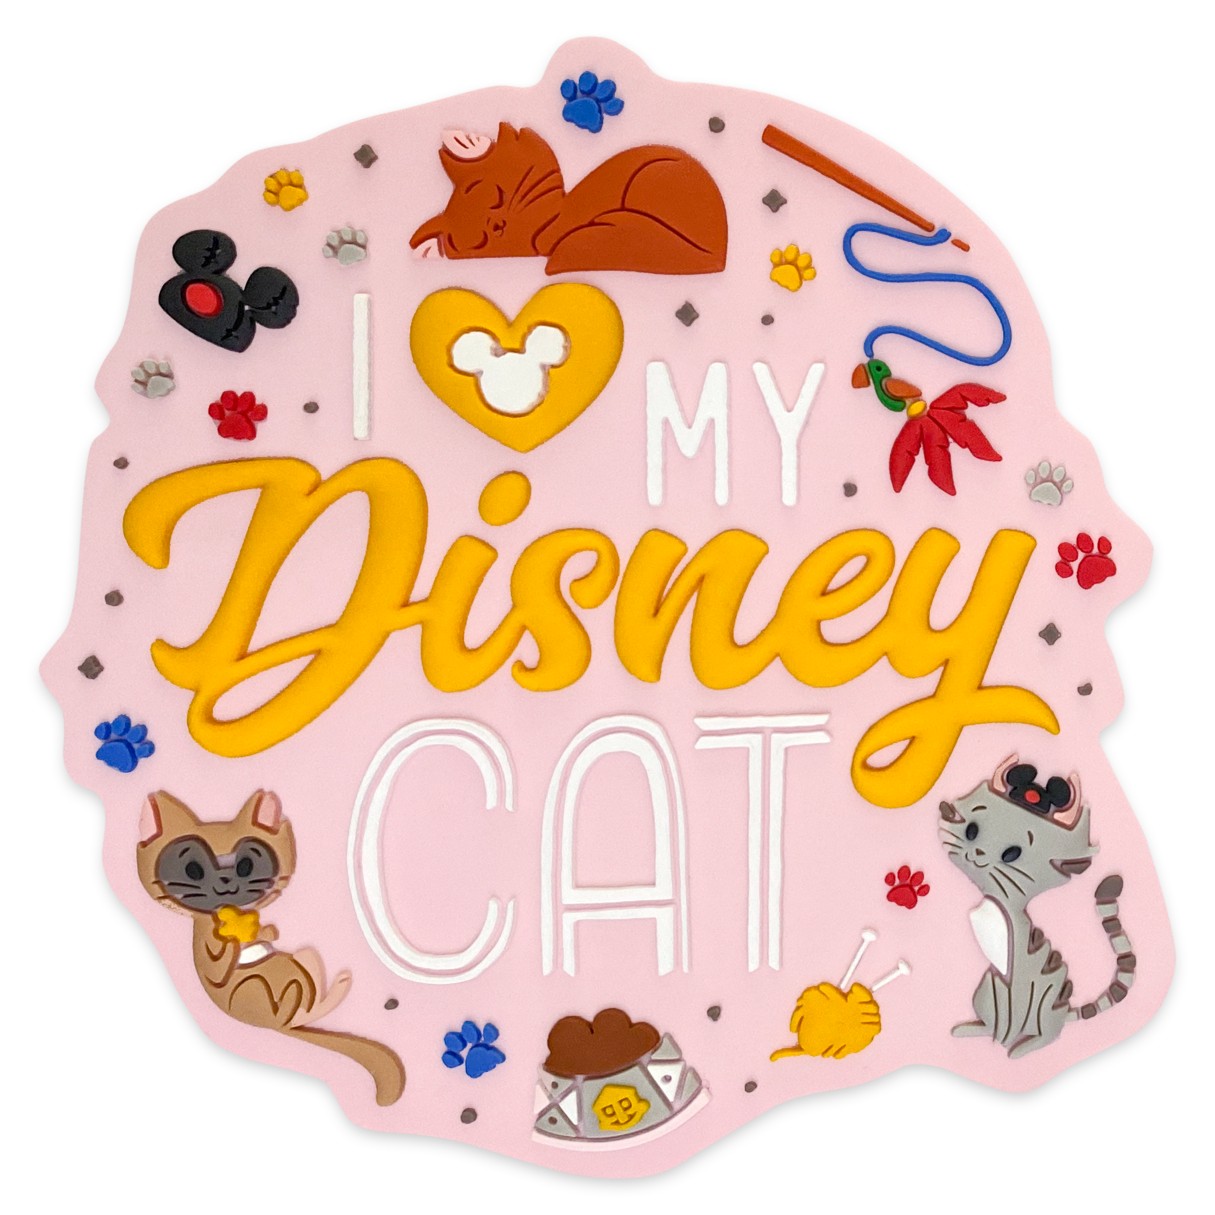 I ♥ My Disney Cat Magnet